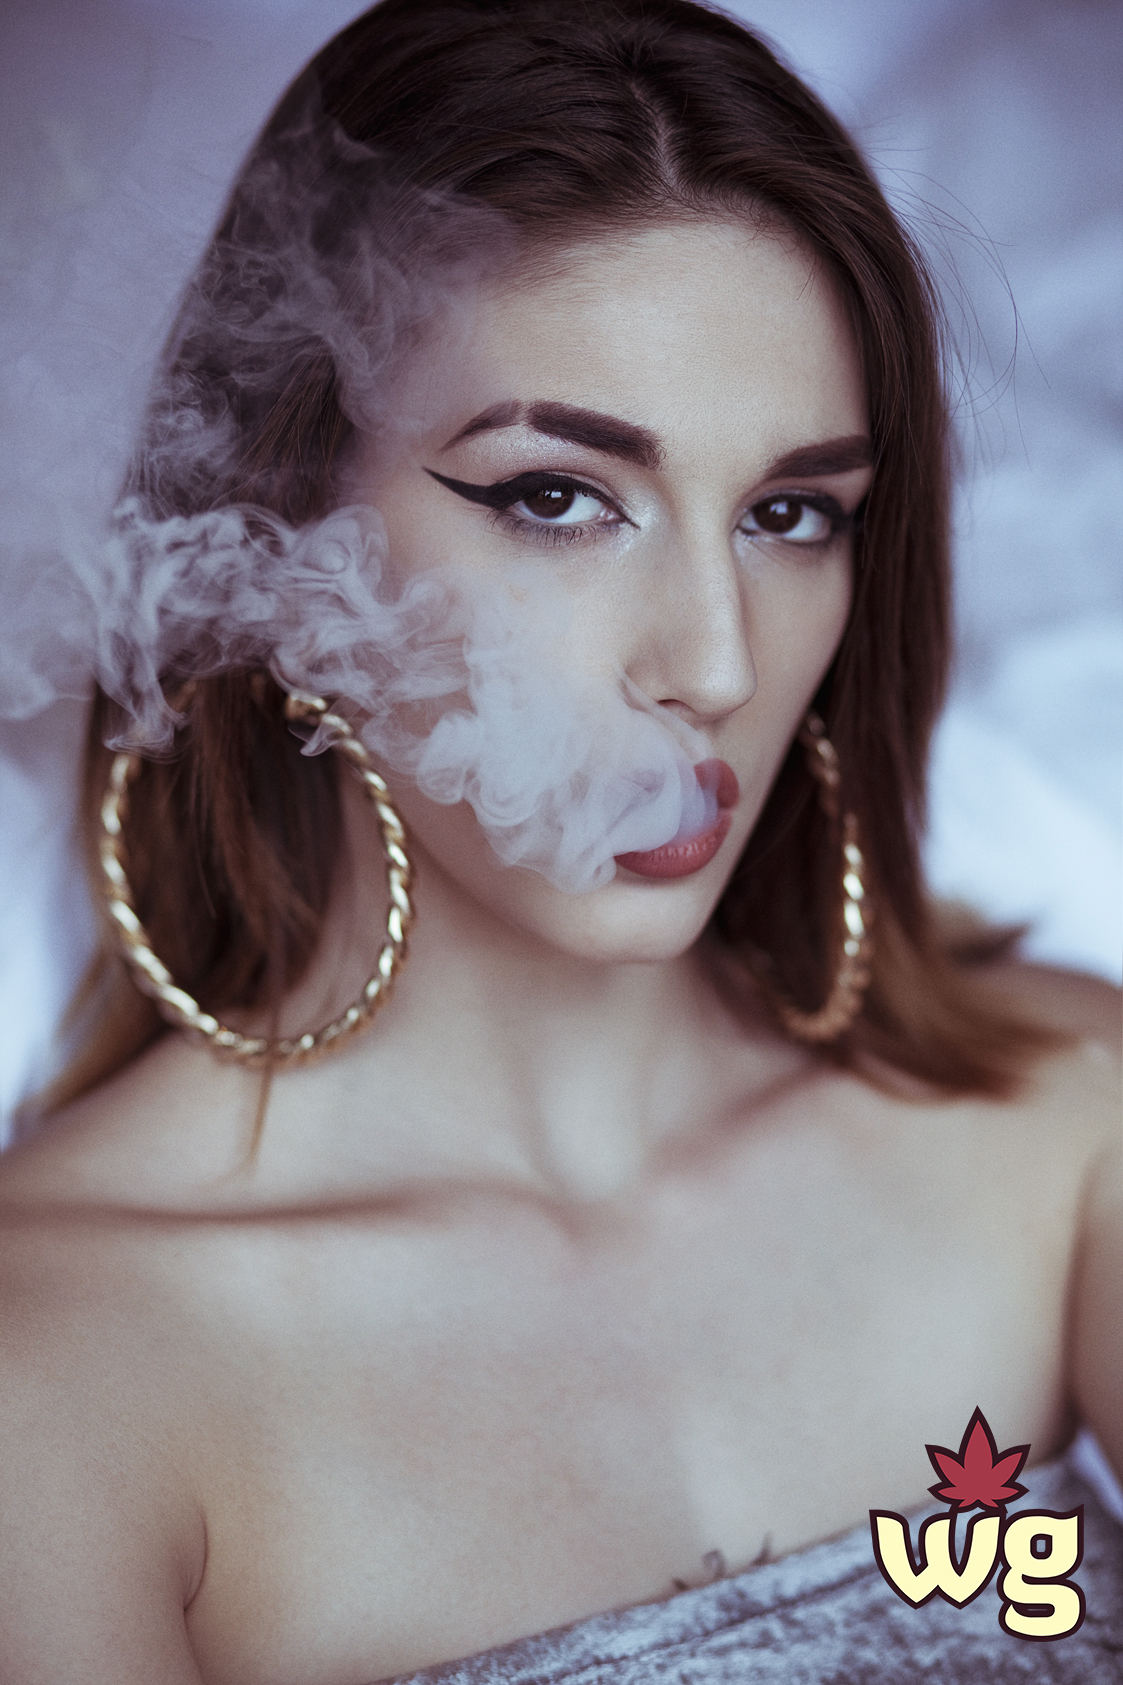 hot woman in sexy make up smoking weed | Weed Girls